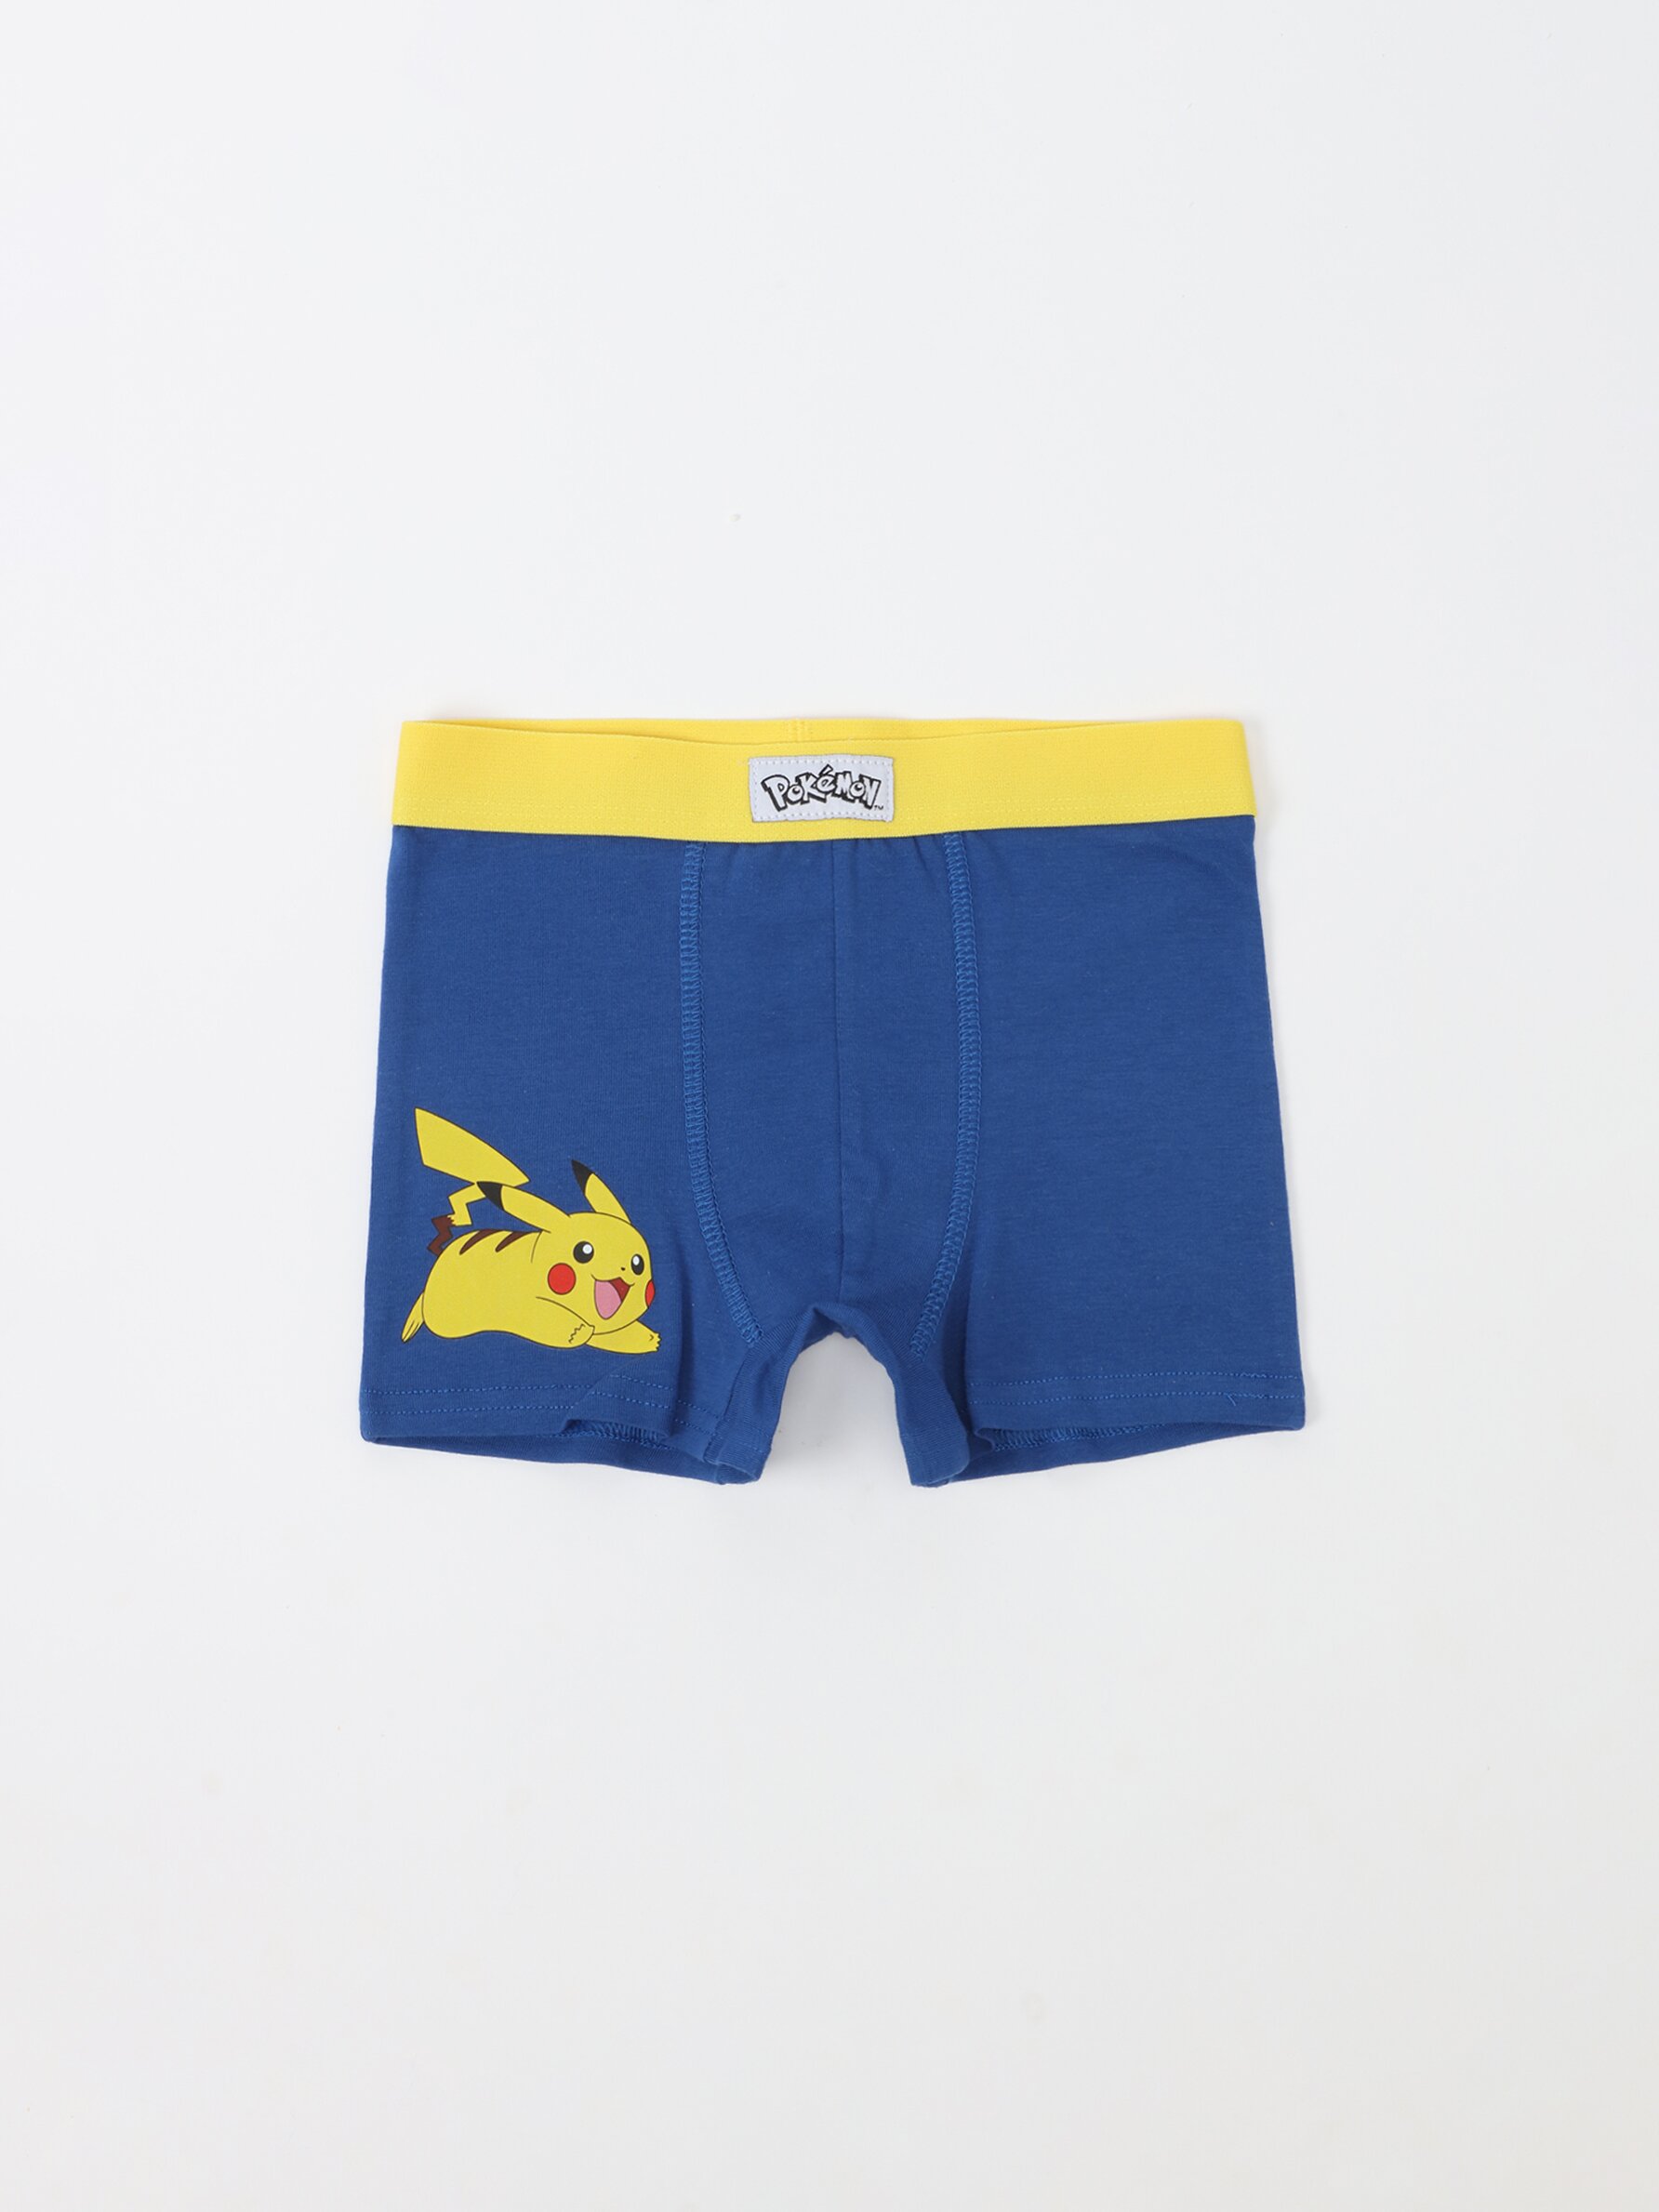 Pokémon Boys Underwear Pack of 3